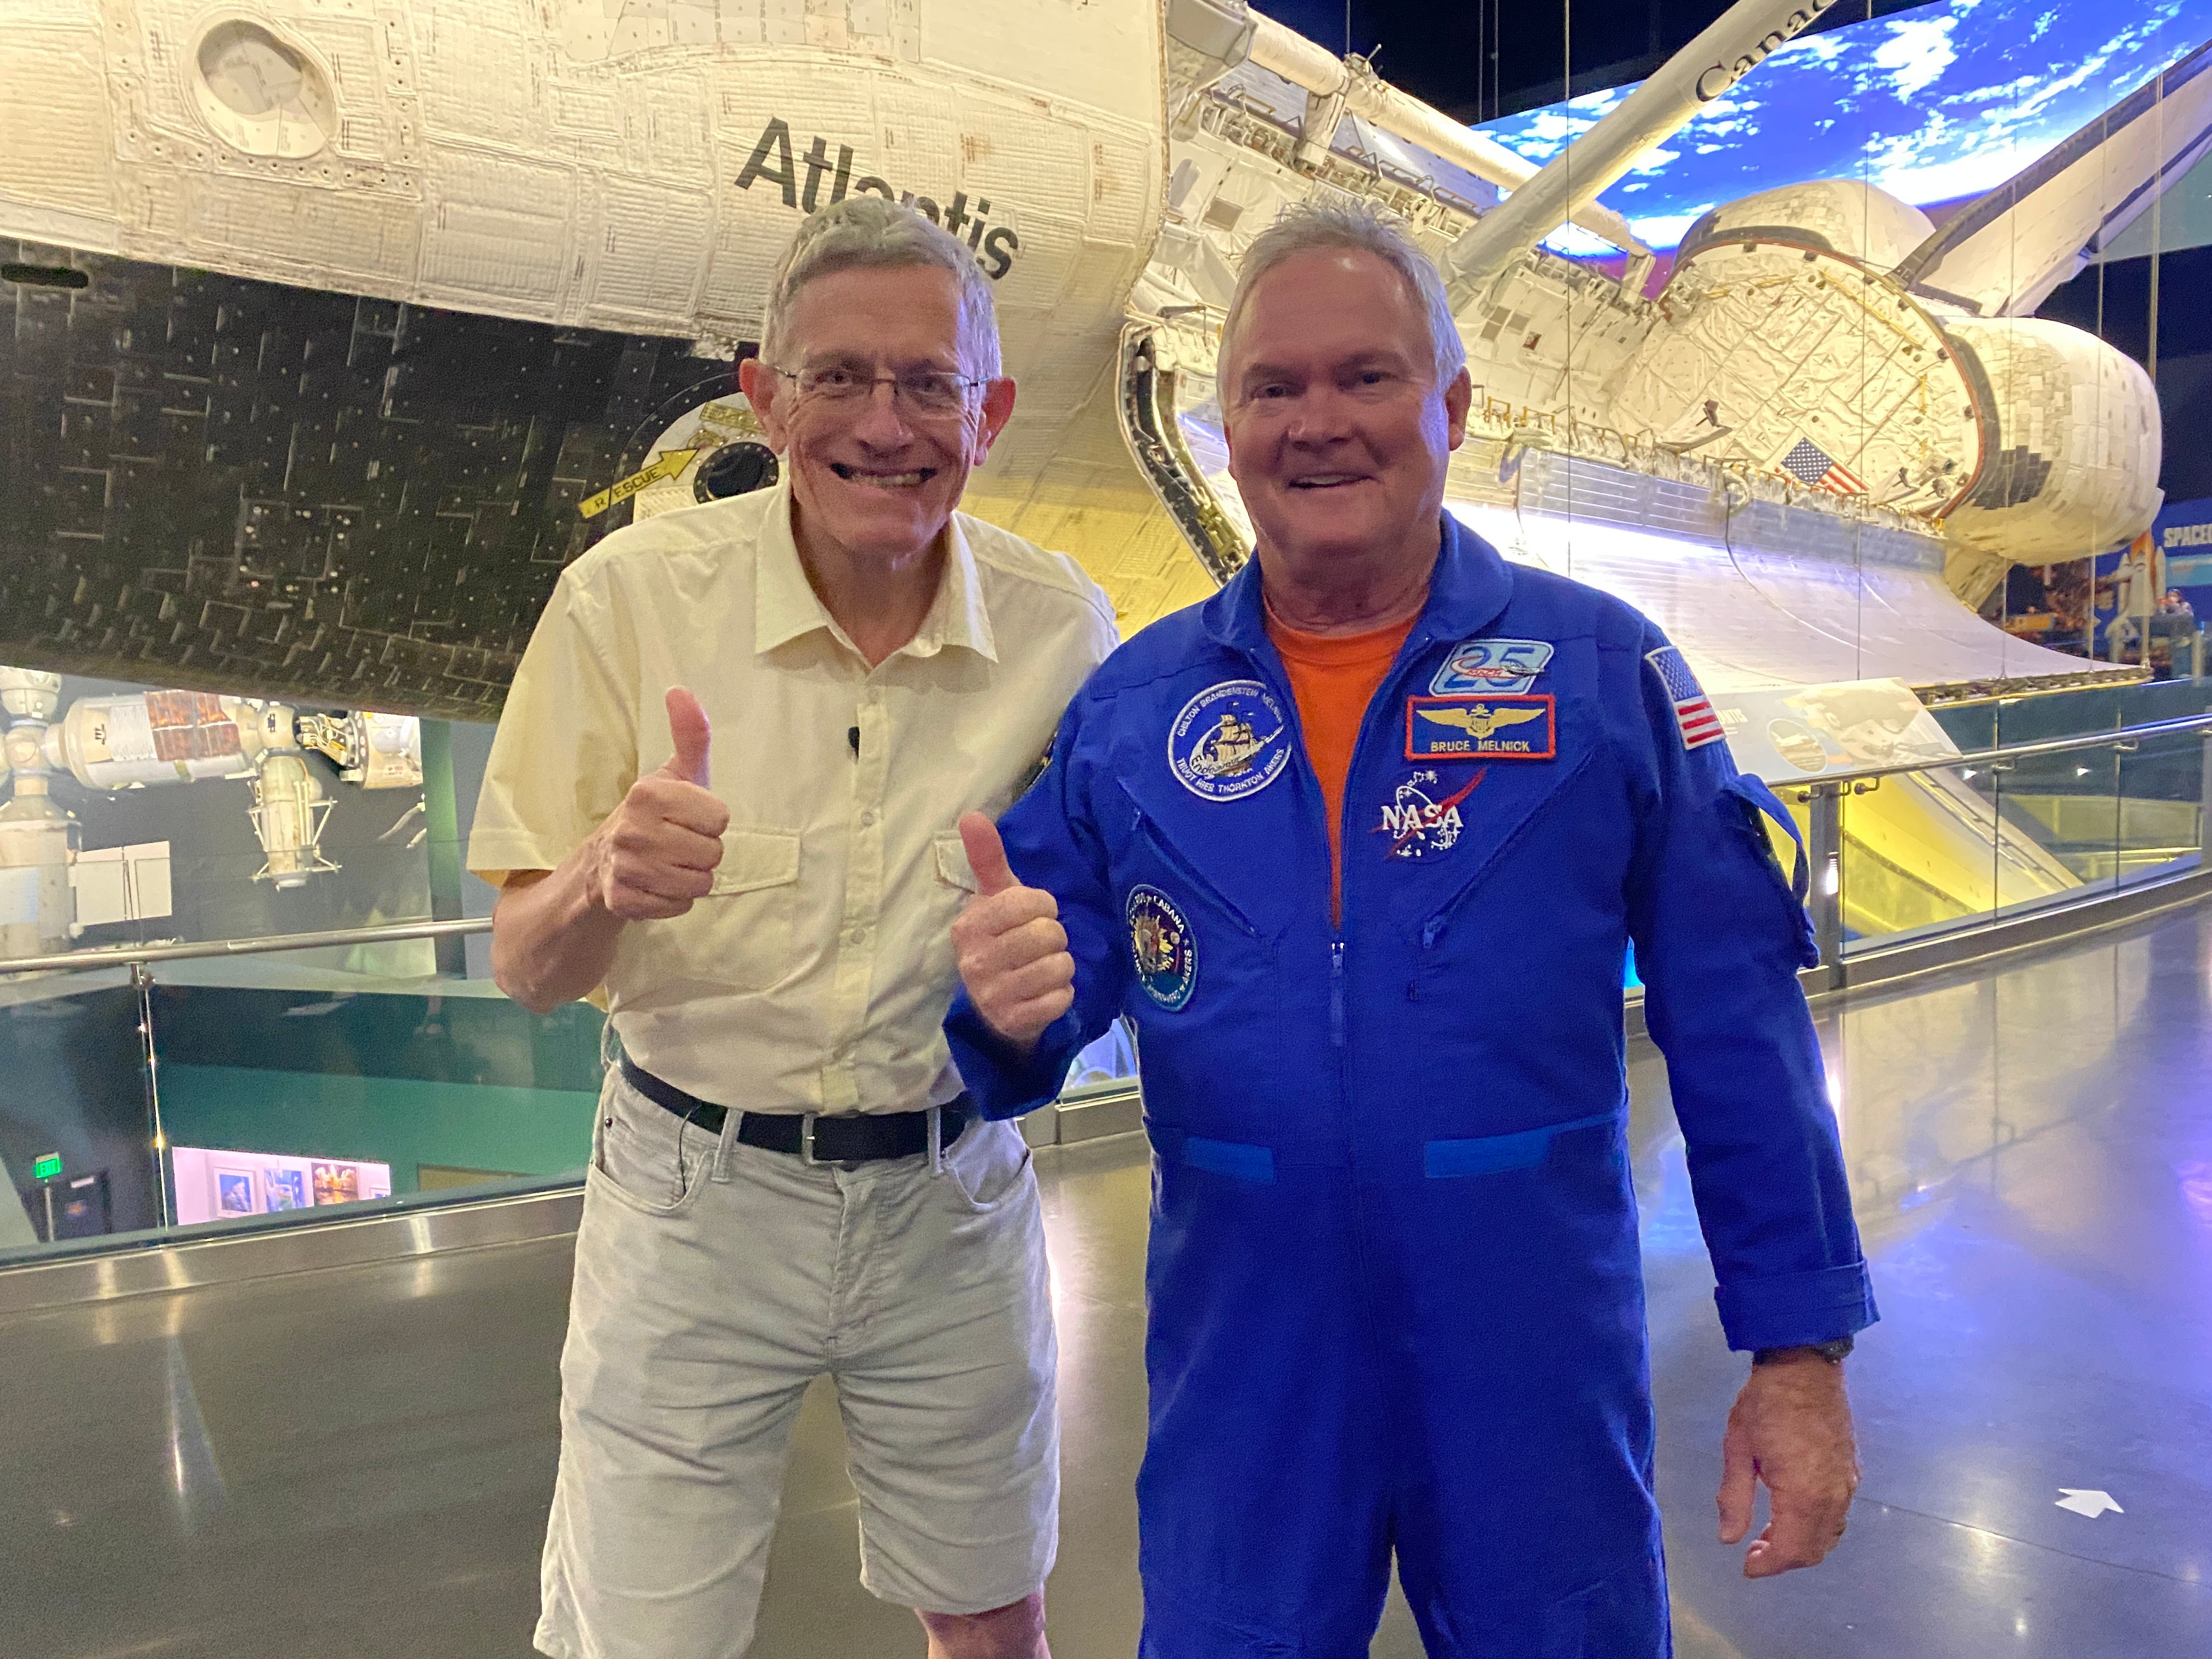 Space invaders: Simon Calder (L) and Bruce Melnick (R) beside Space Shuttle Atlantis